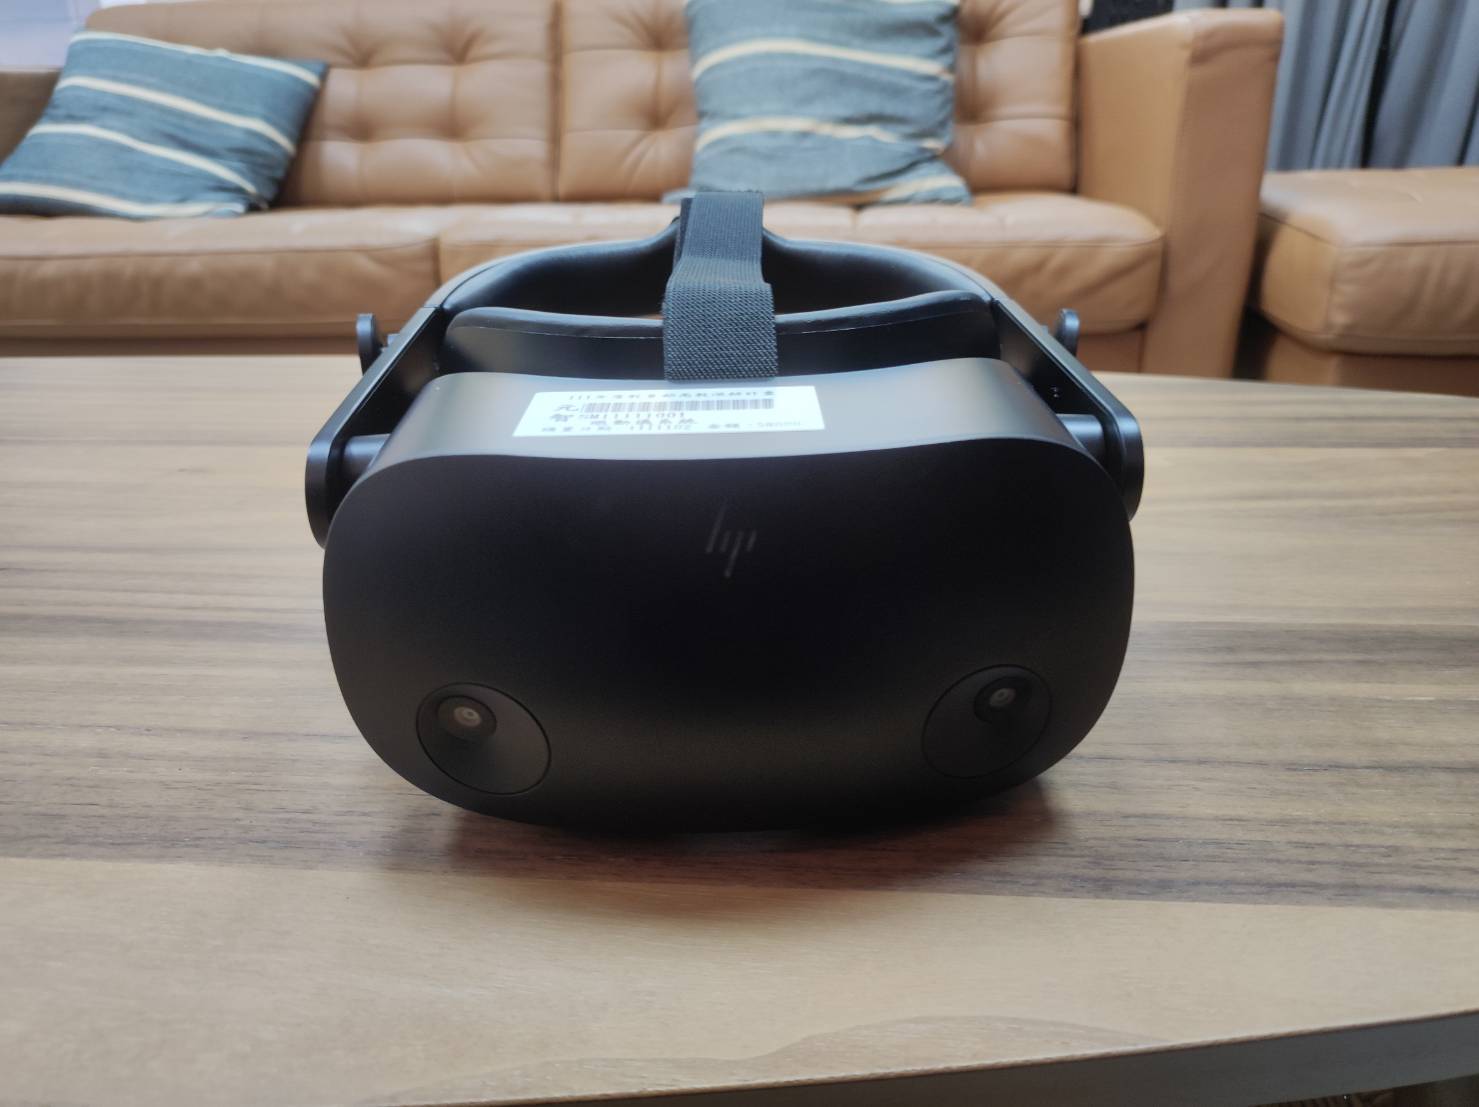 VR Eye Movement Helmet(Reverb G2 Omnicept Edition)